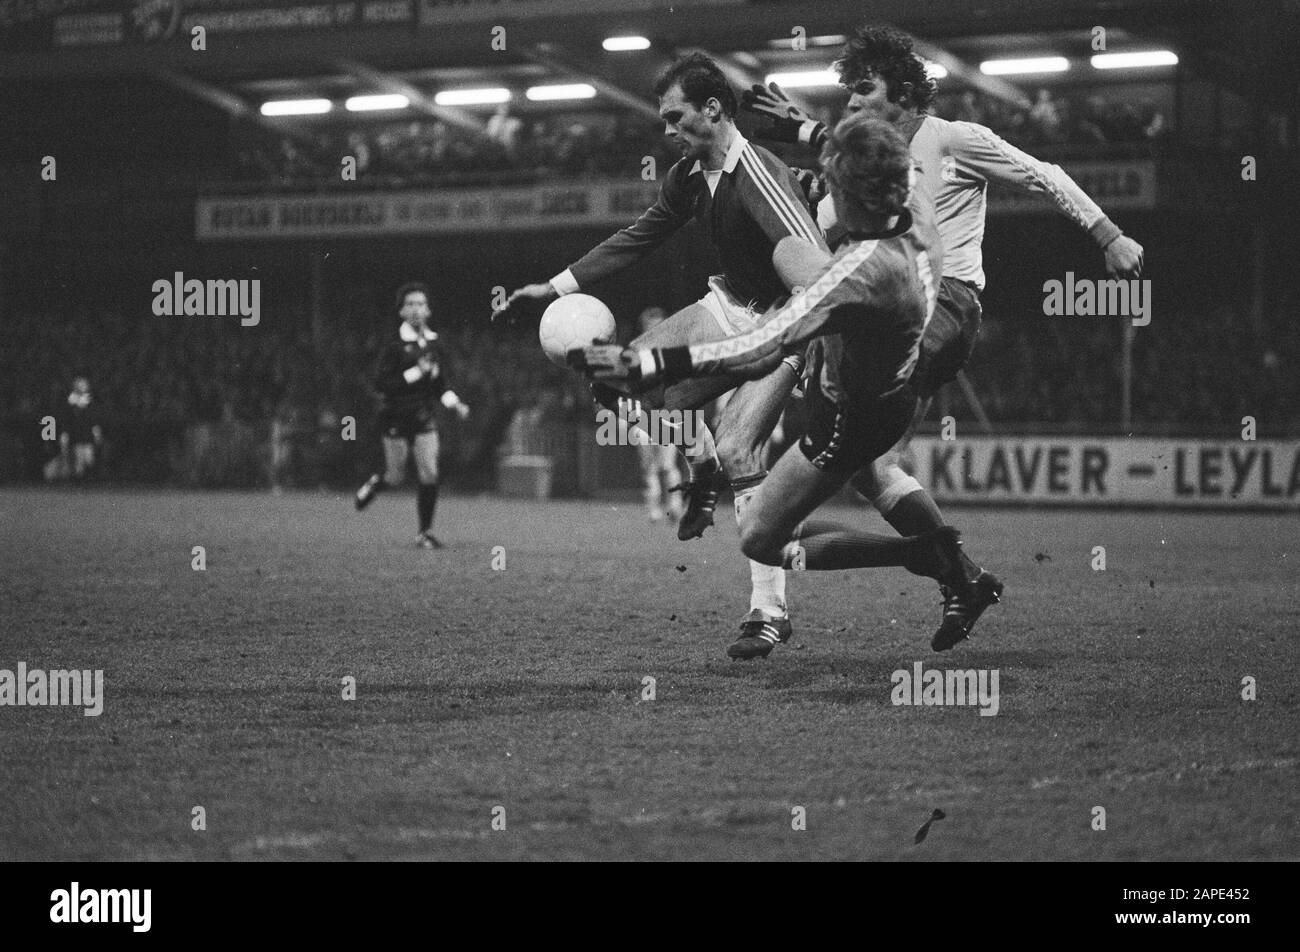 AZ 67 against FC Utrecht 1-0; v.l.n.r. Metgod (AZ), goalkeeper van Breukelen and van Hanegem (Utrecht) Date: 5 april 1980 Location: Utrecht Keywords: goalkeepers, sport, football Stock Photo